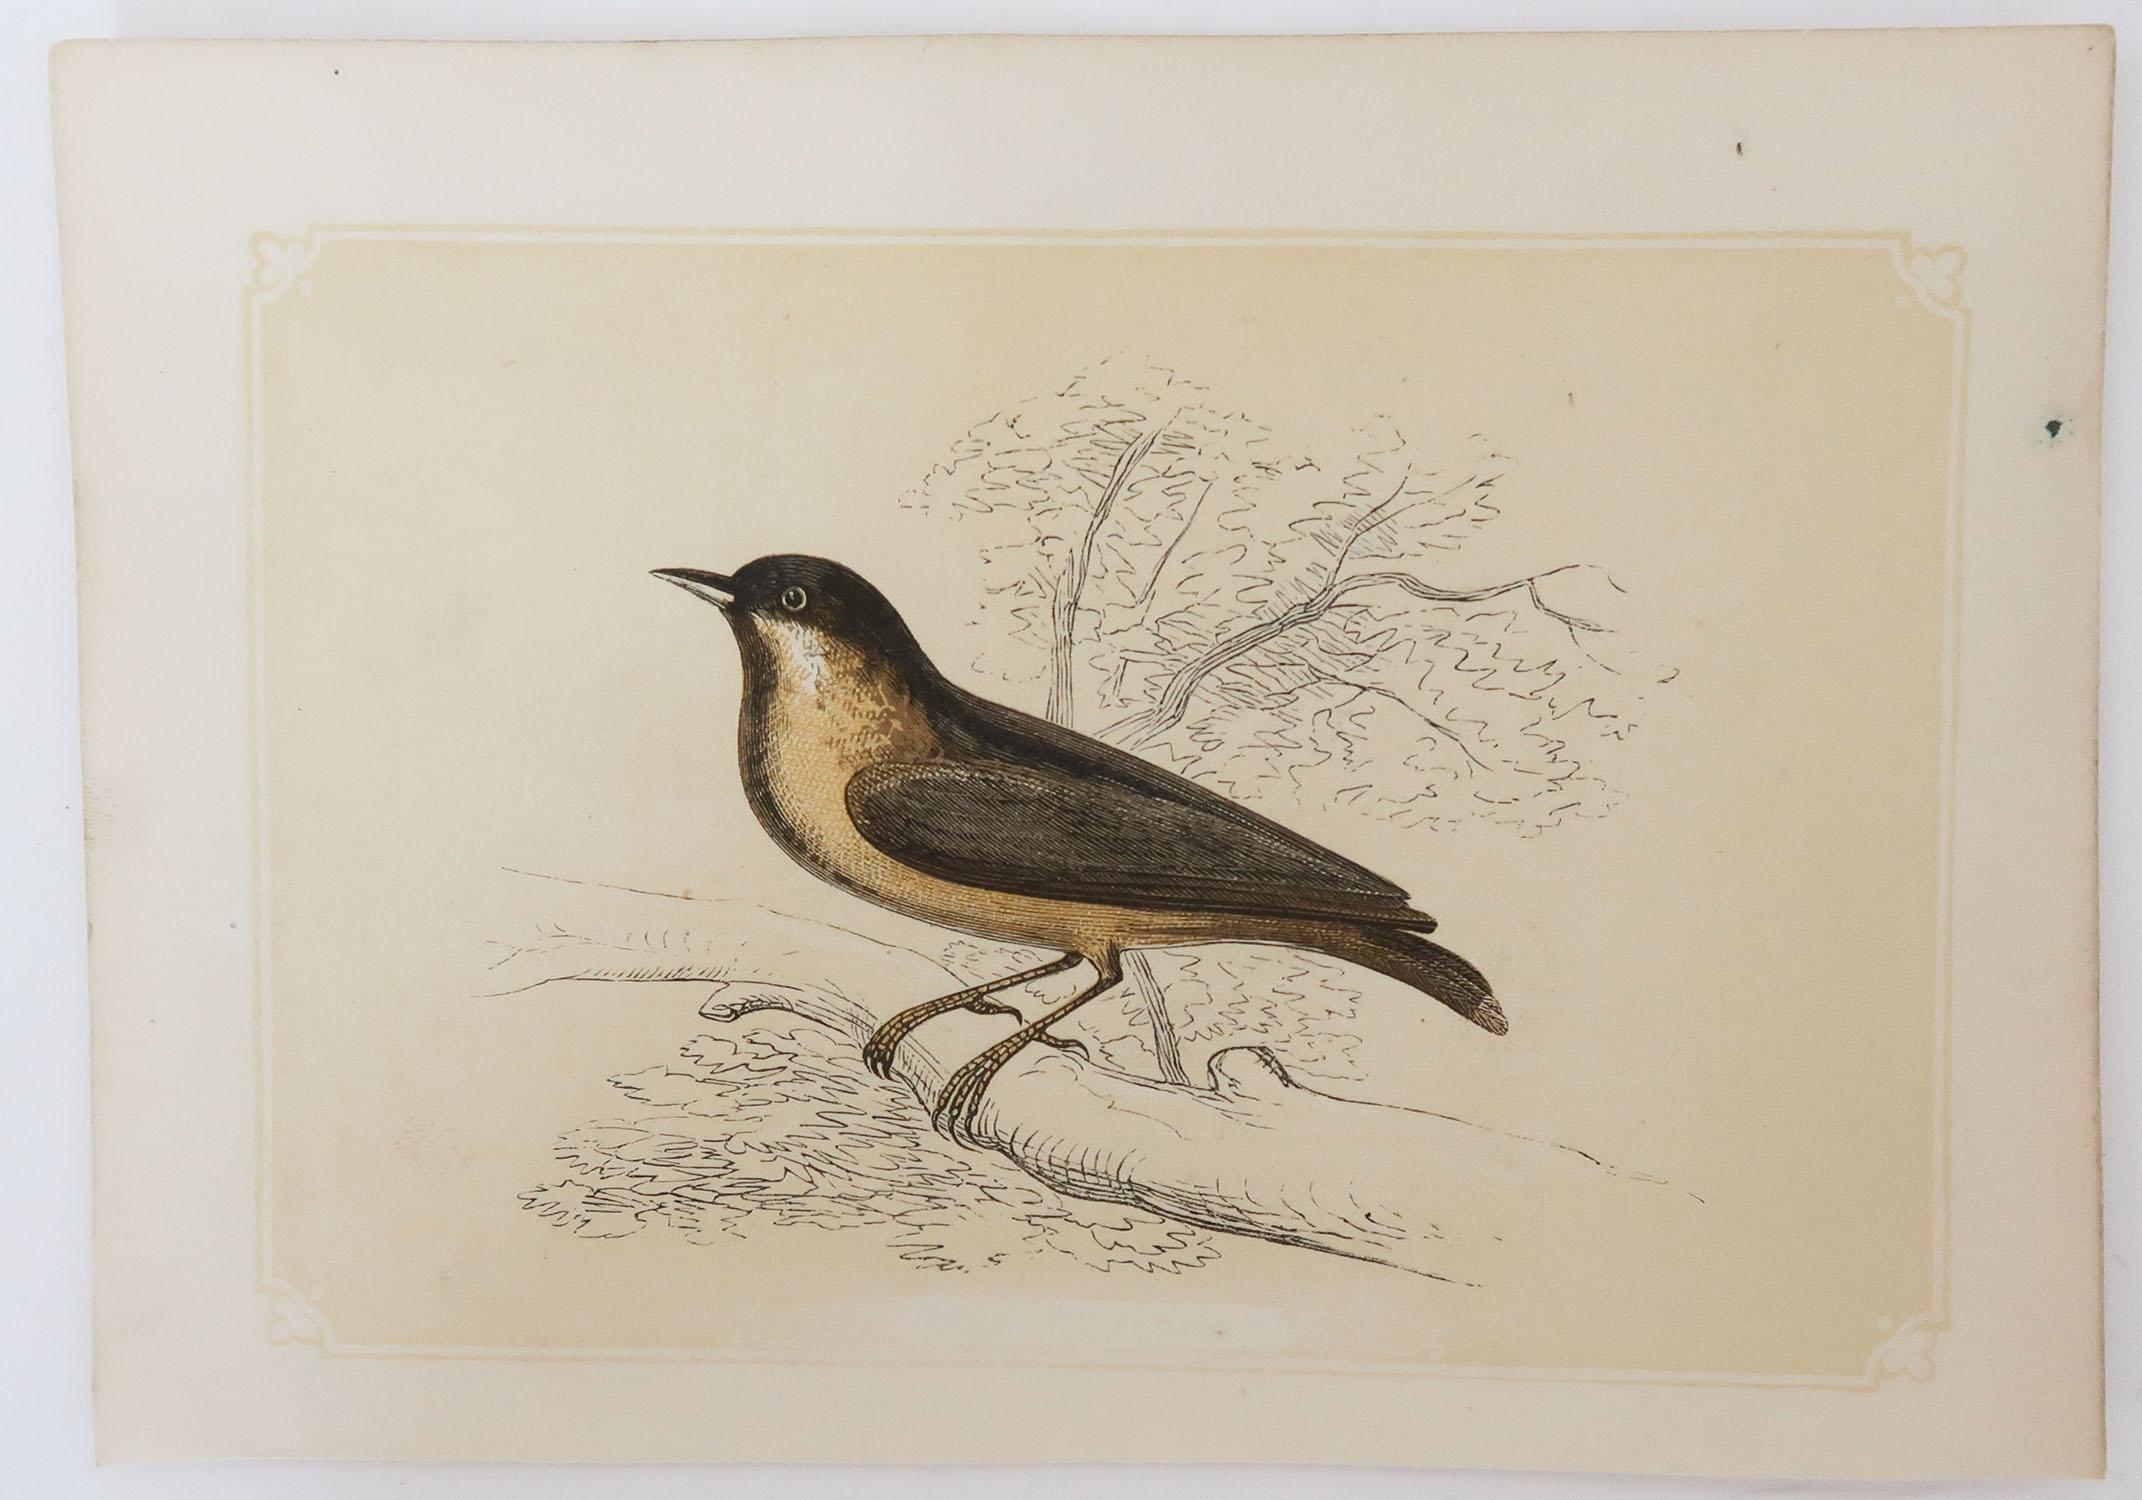 Folk Art Original Antique Bird Print, the Nuthatch, Tallis, circa 1850